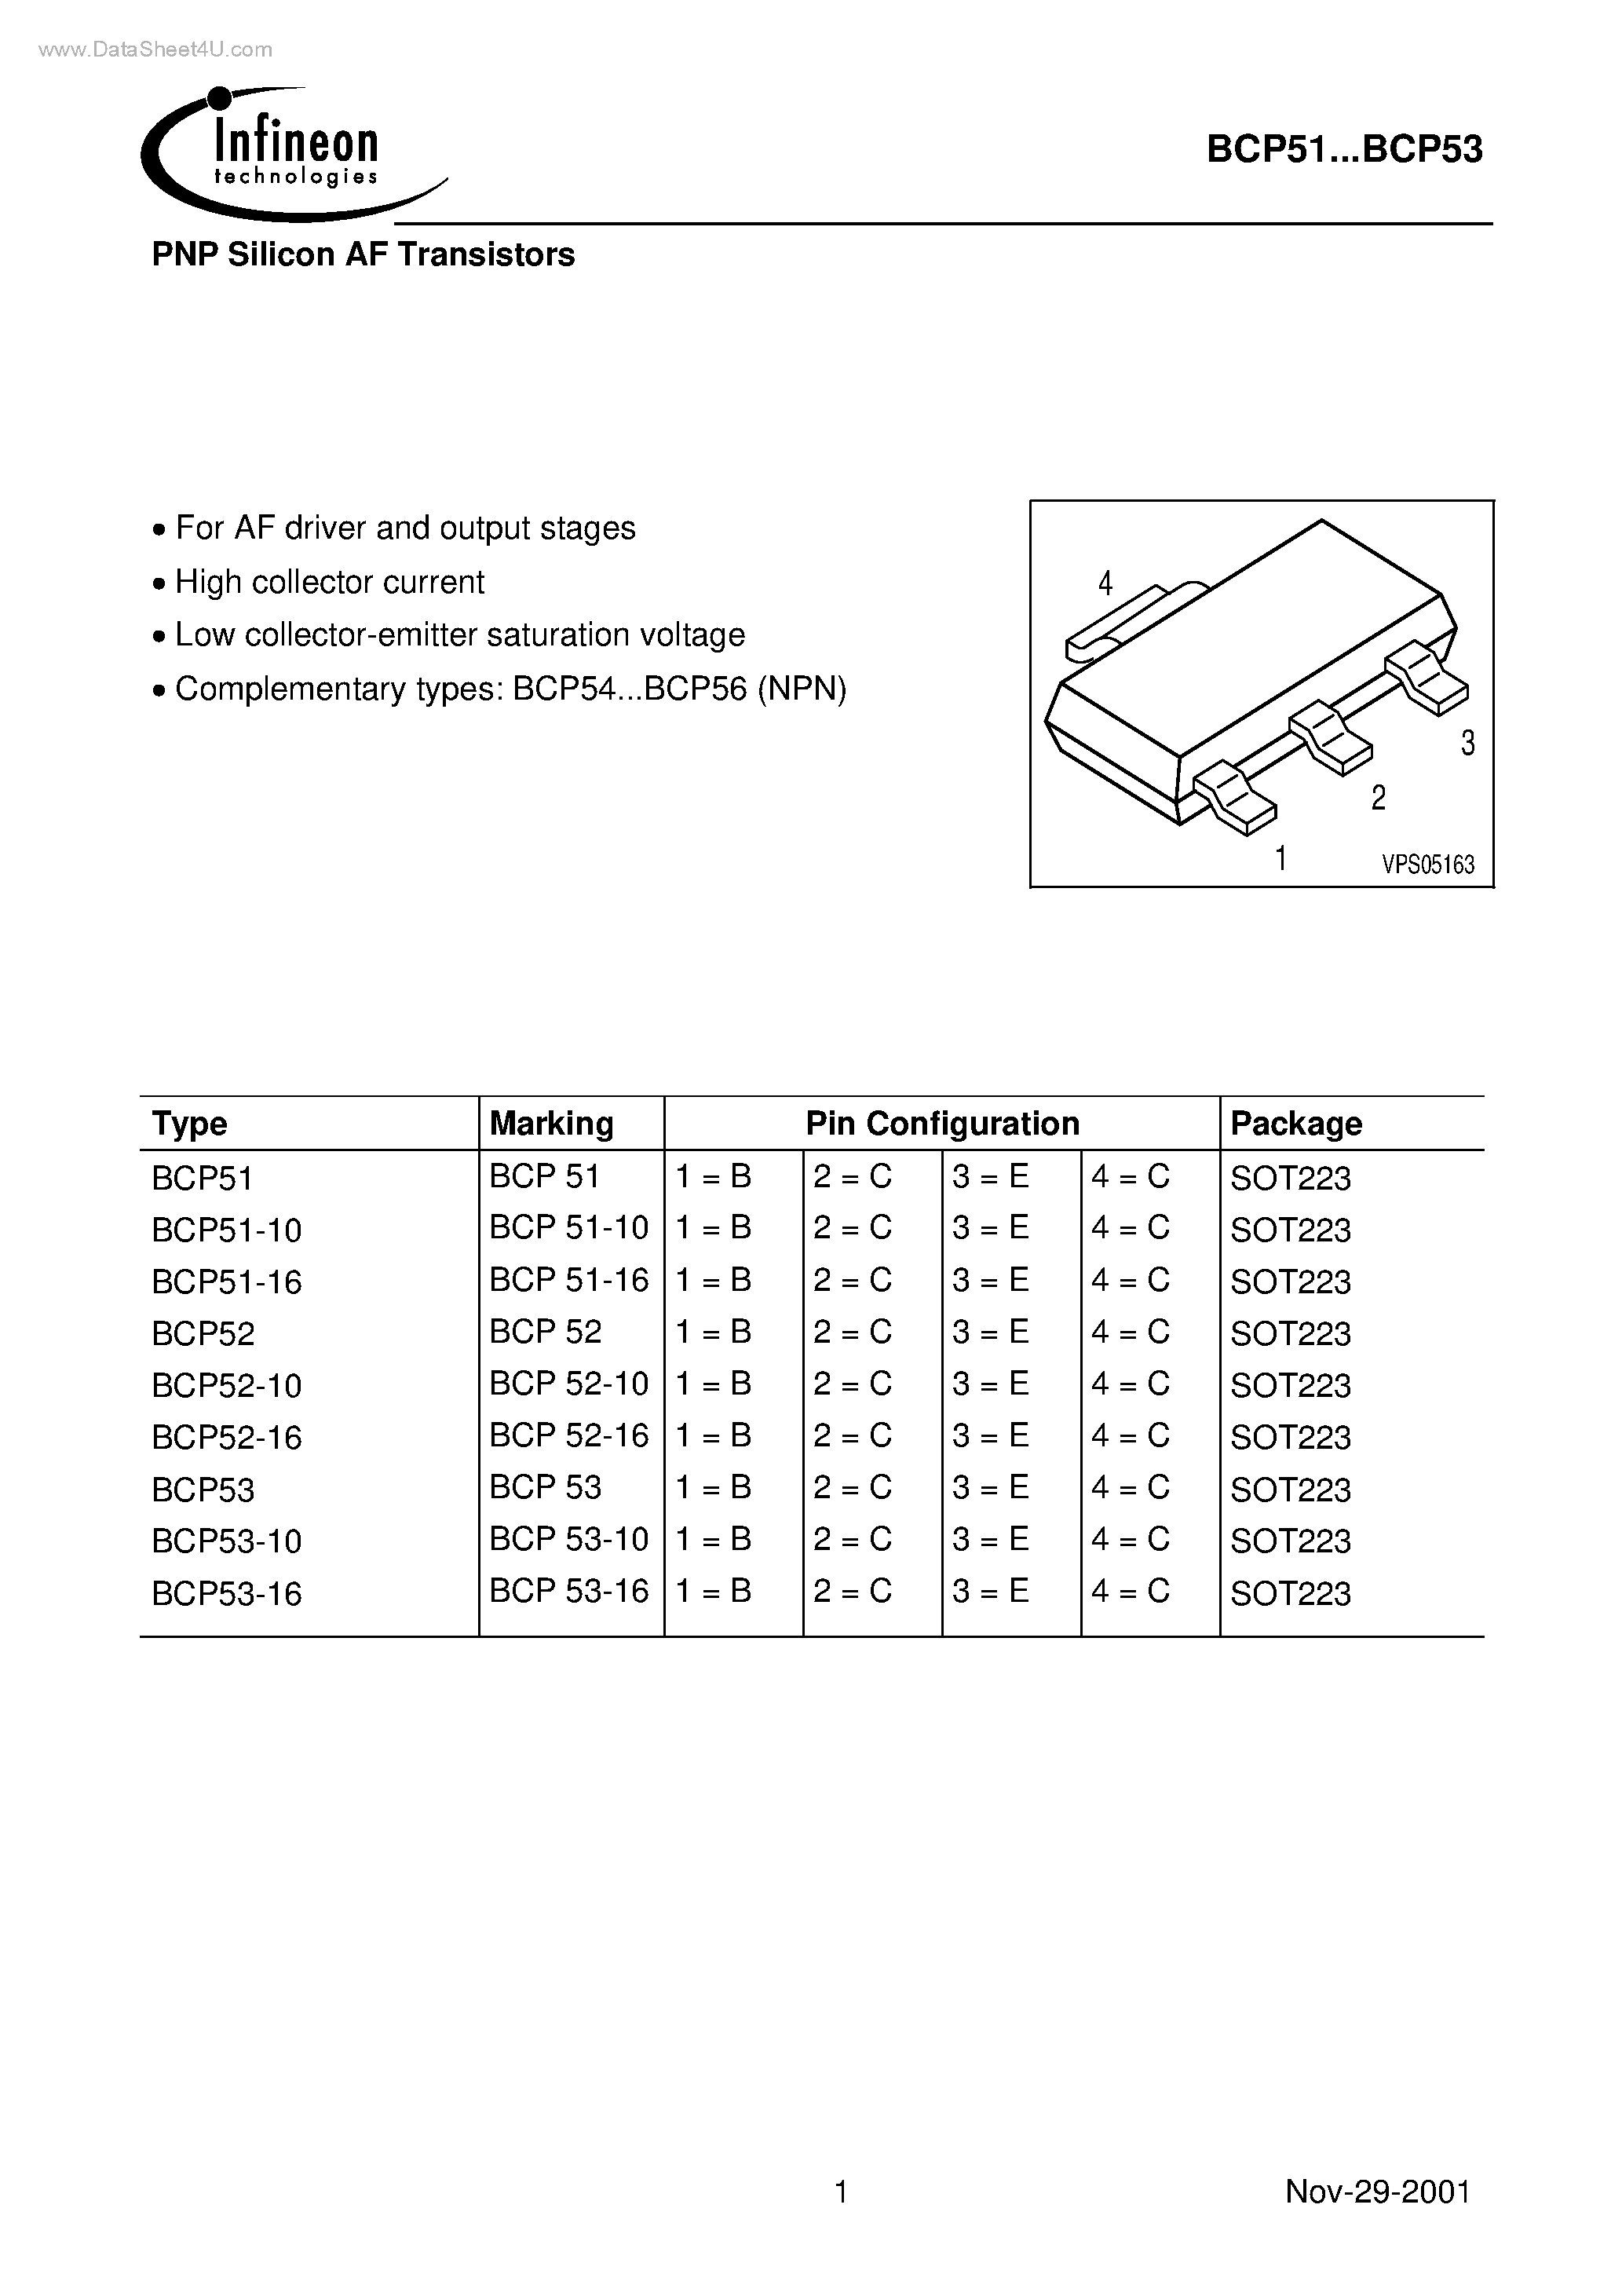 Datasheet BCP52 - PNP Silicon AF Transistors page 1